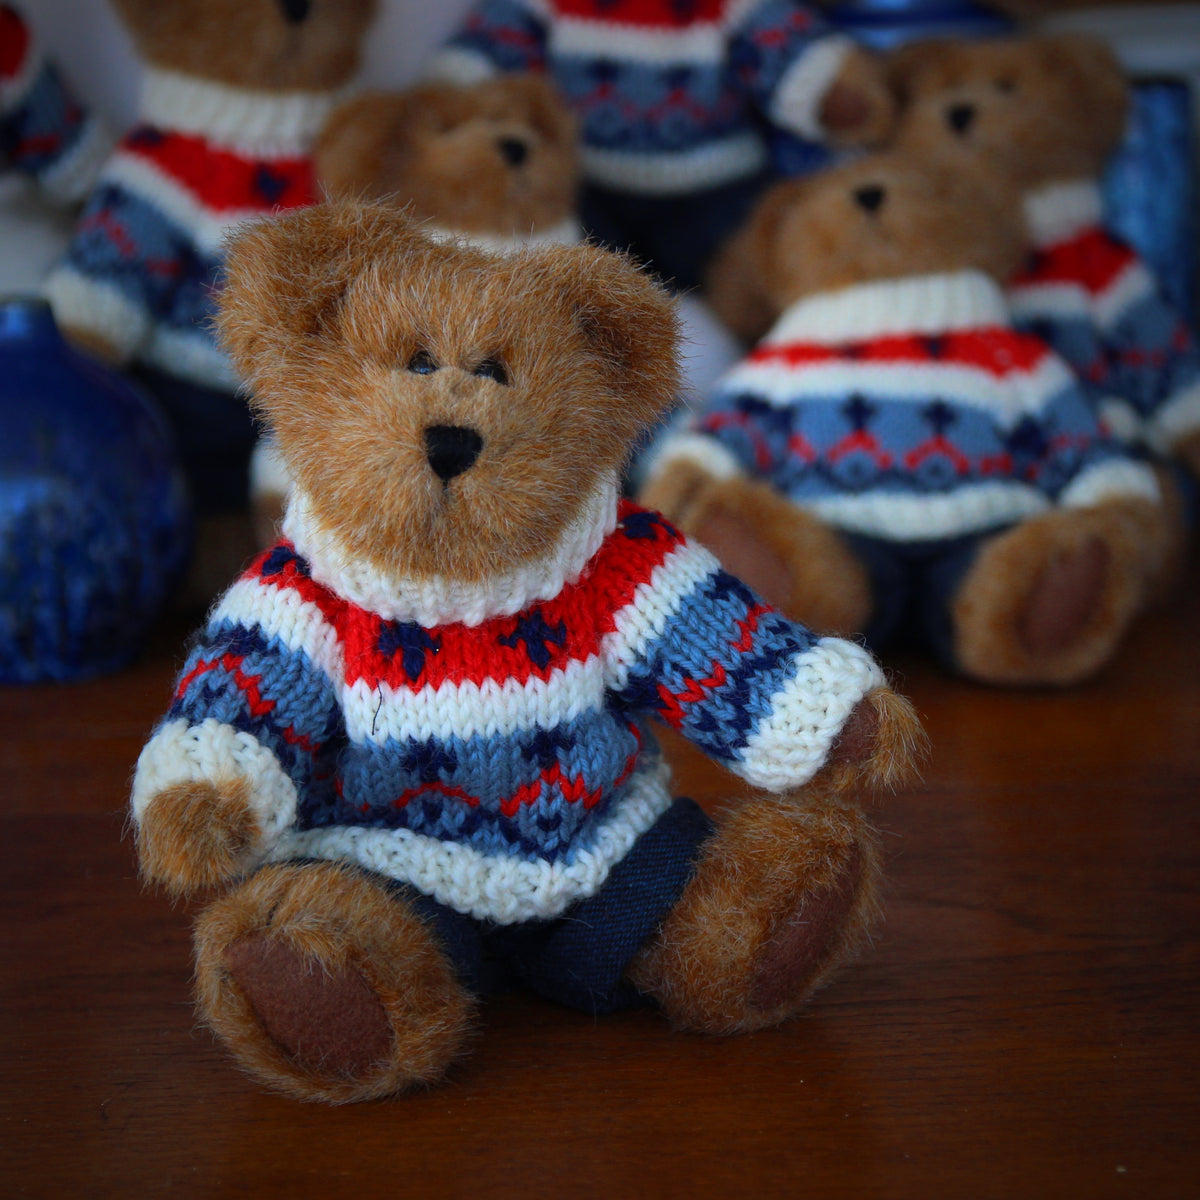 Sweatered Teddy Bear